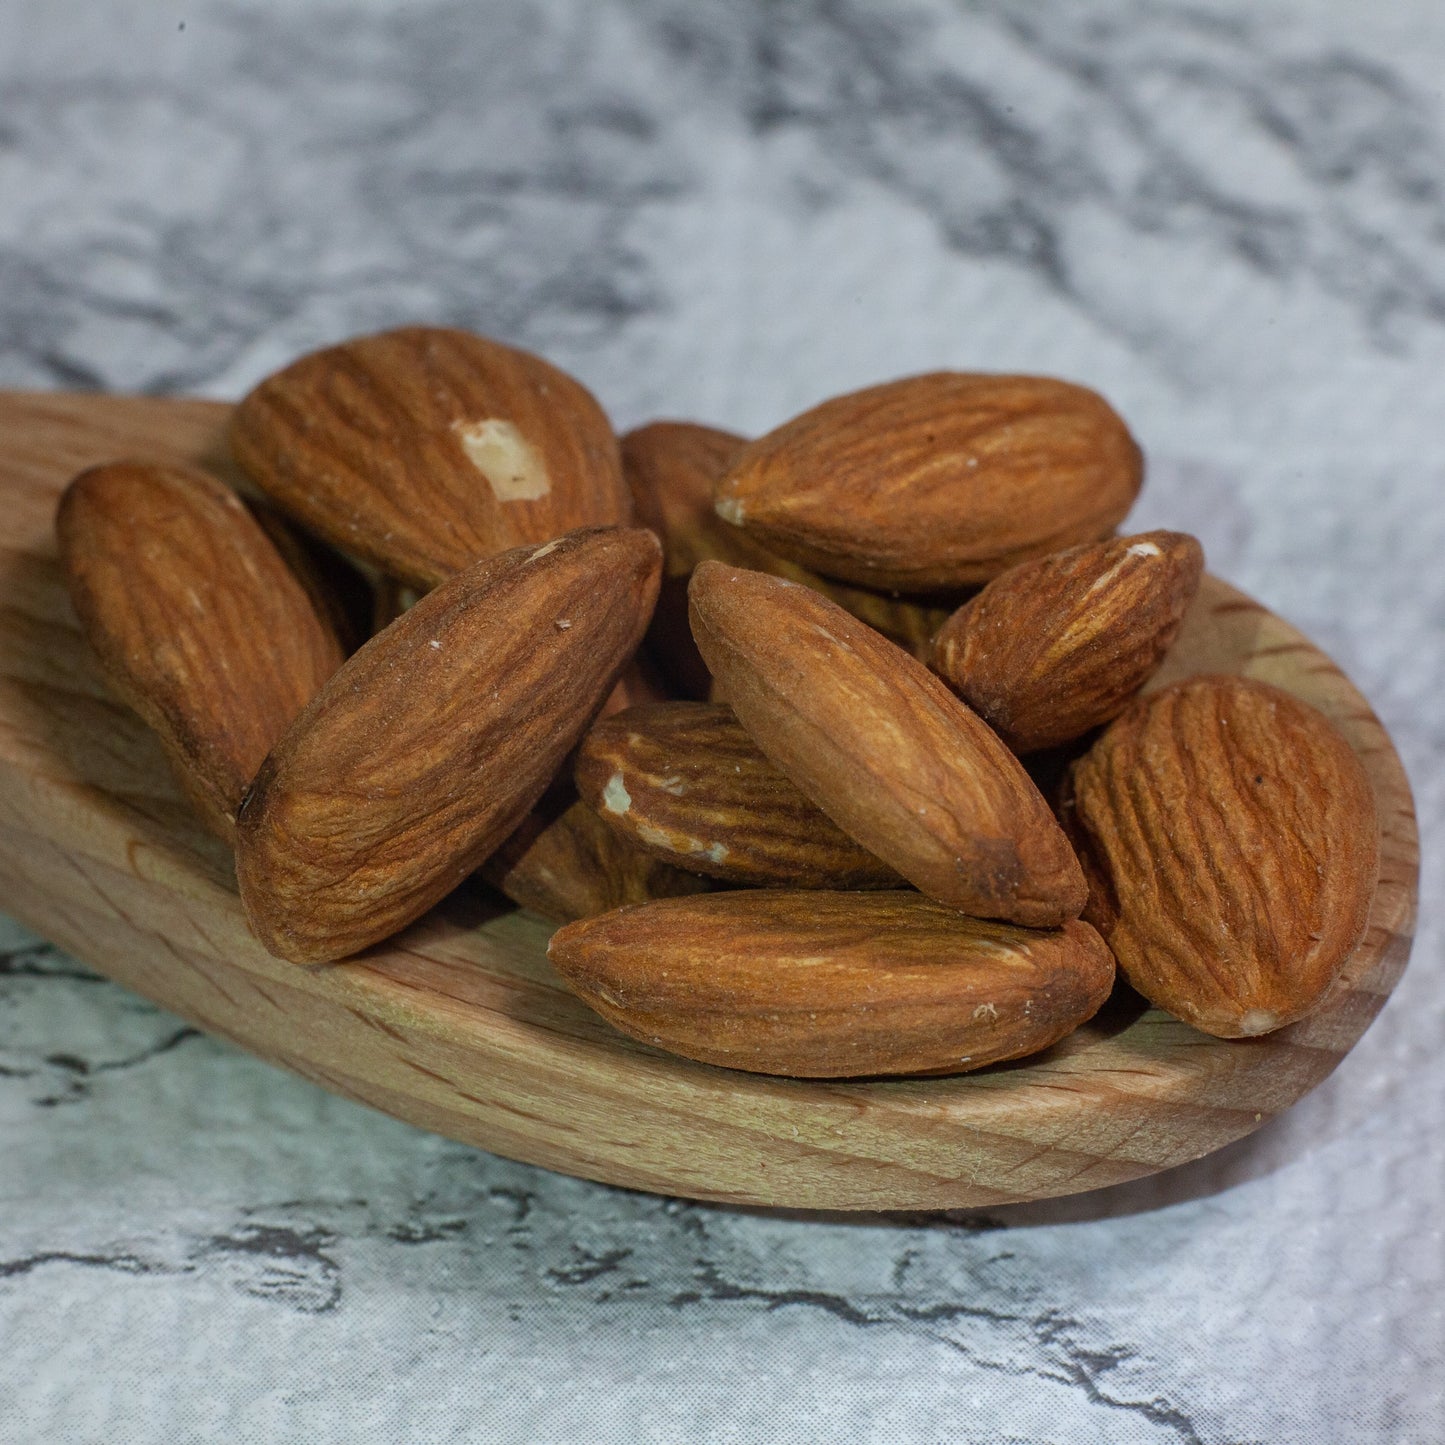 Organic Almonds serving